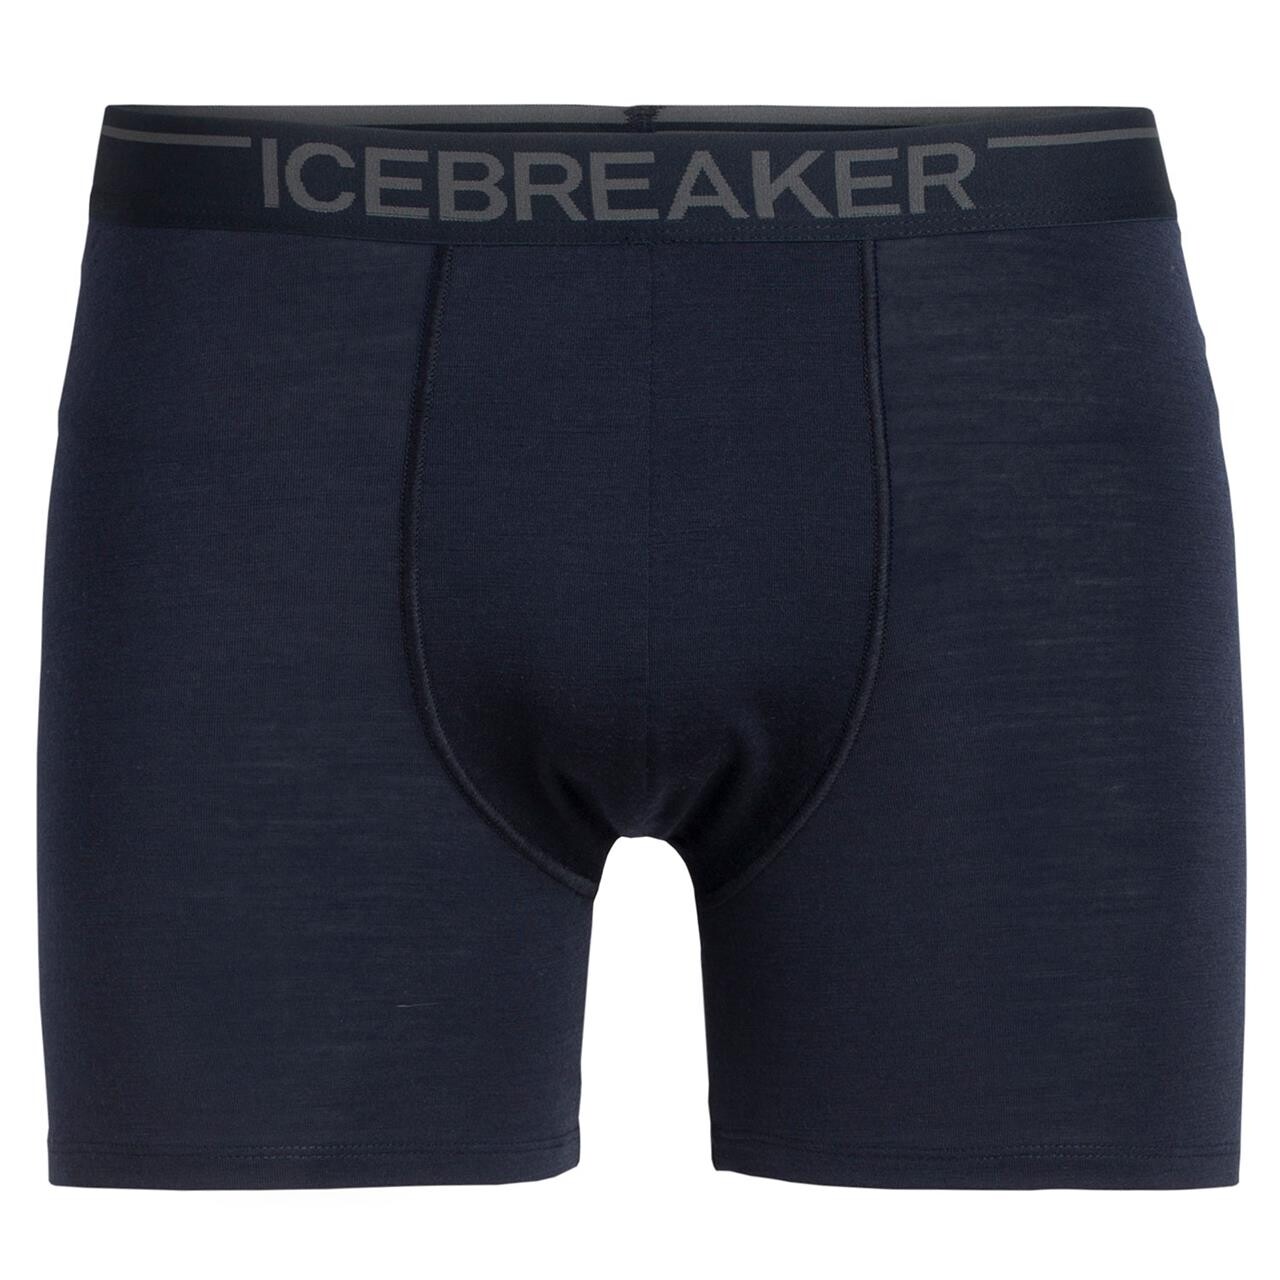 Se Icebreaker Mens Anatomica Boxers (Blå (MIDNIGHT NAVY) Small) hos Friluftsland.dk